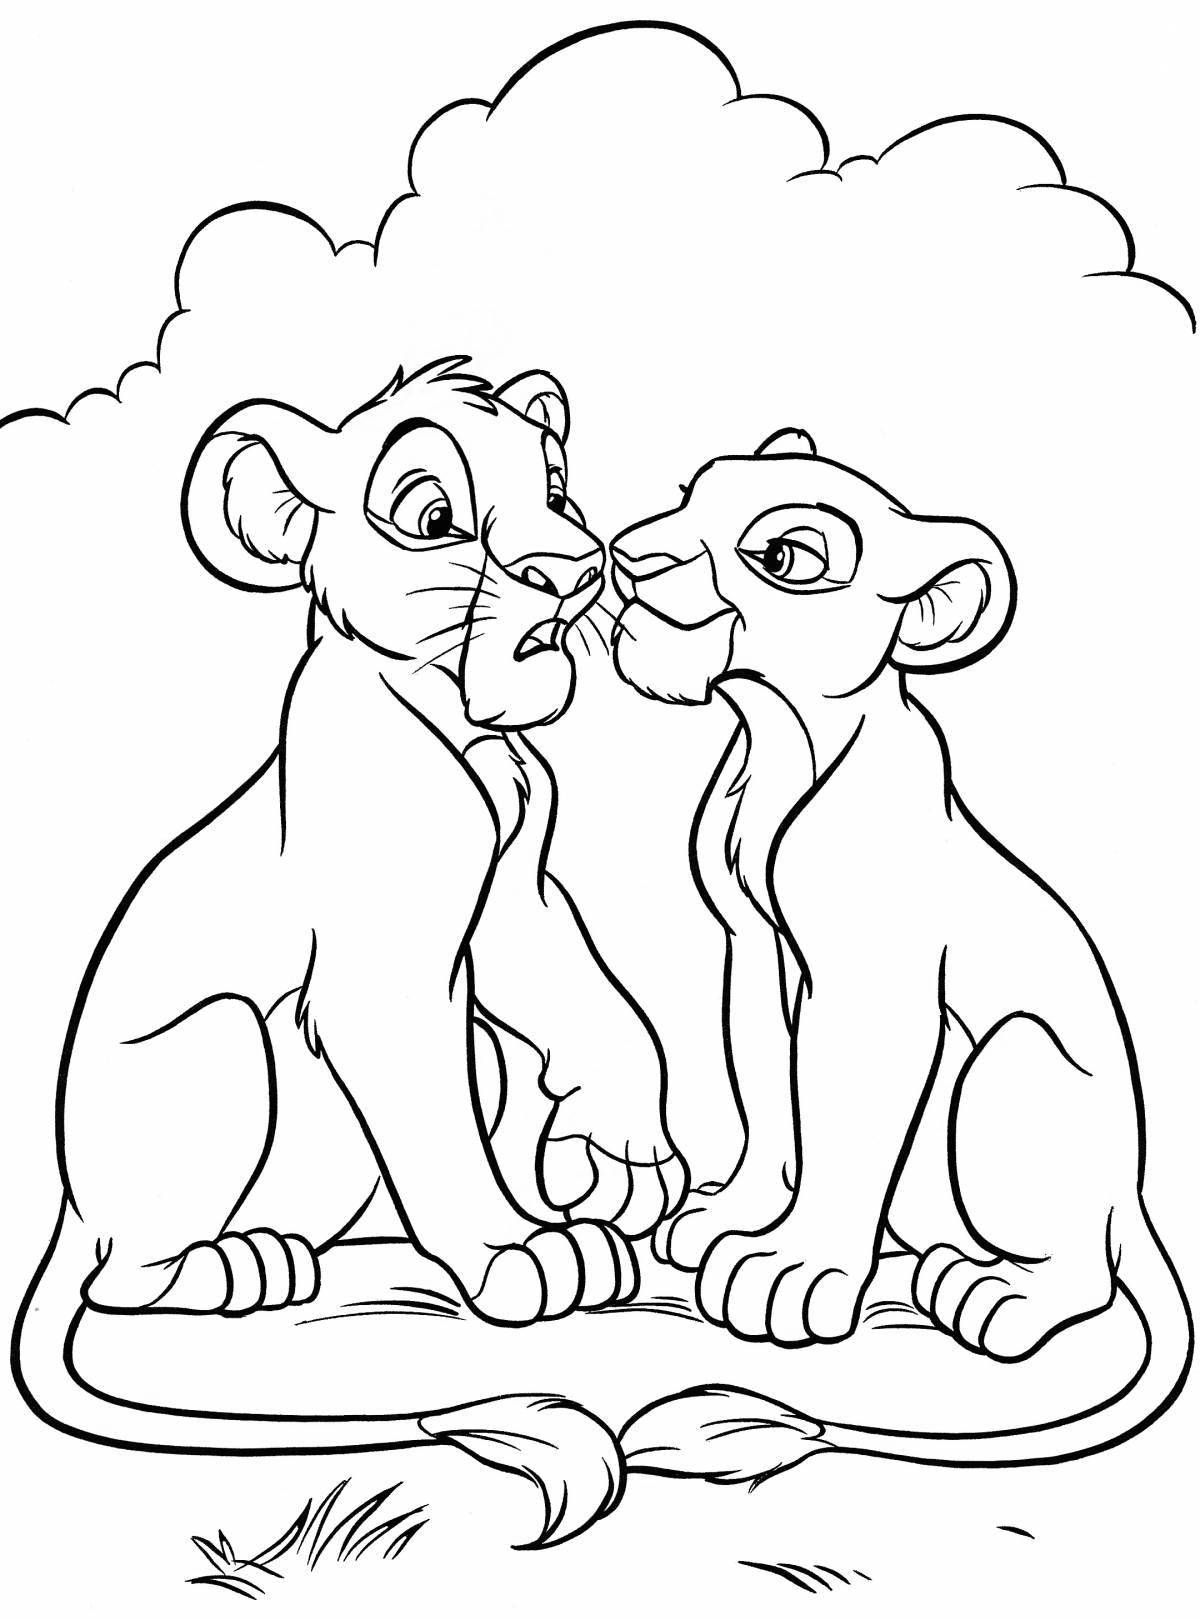 Simba and Nala playful coloring